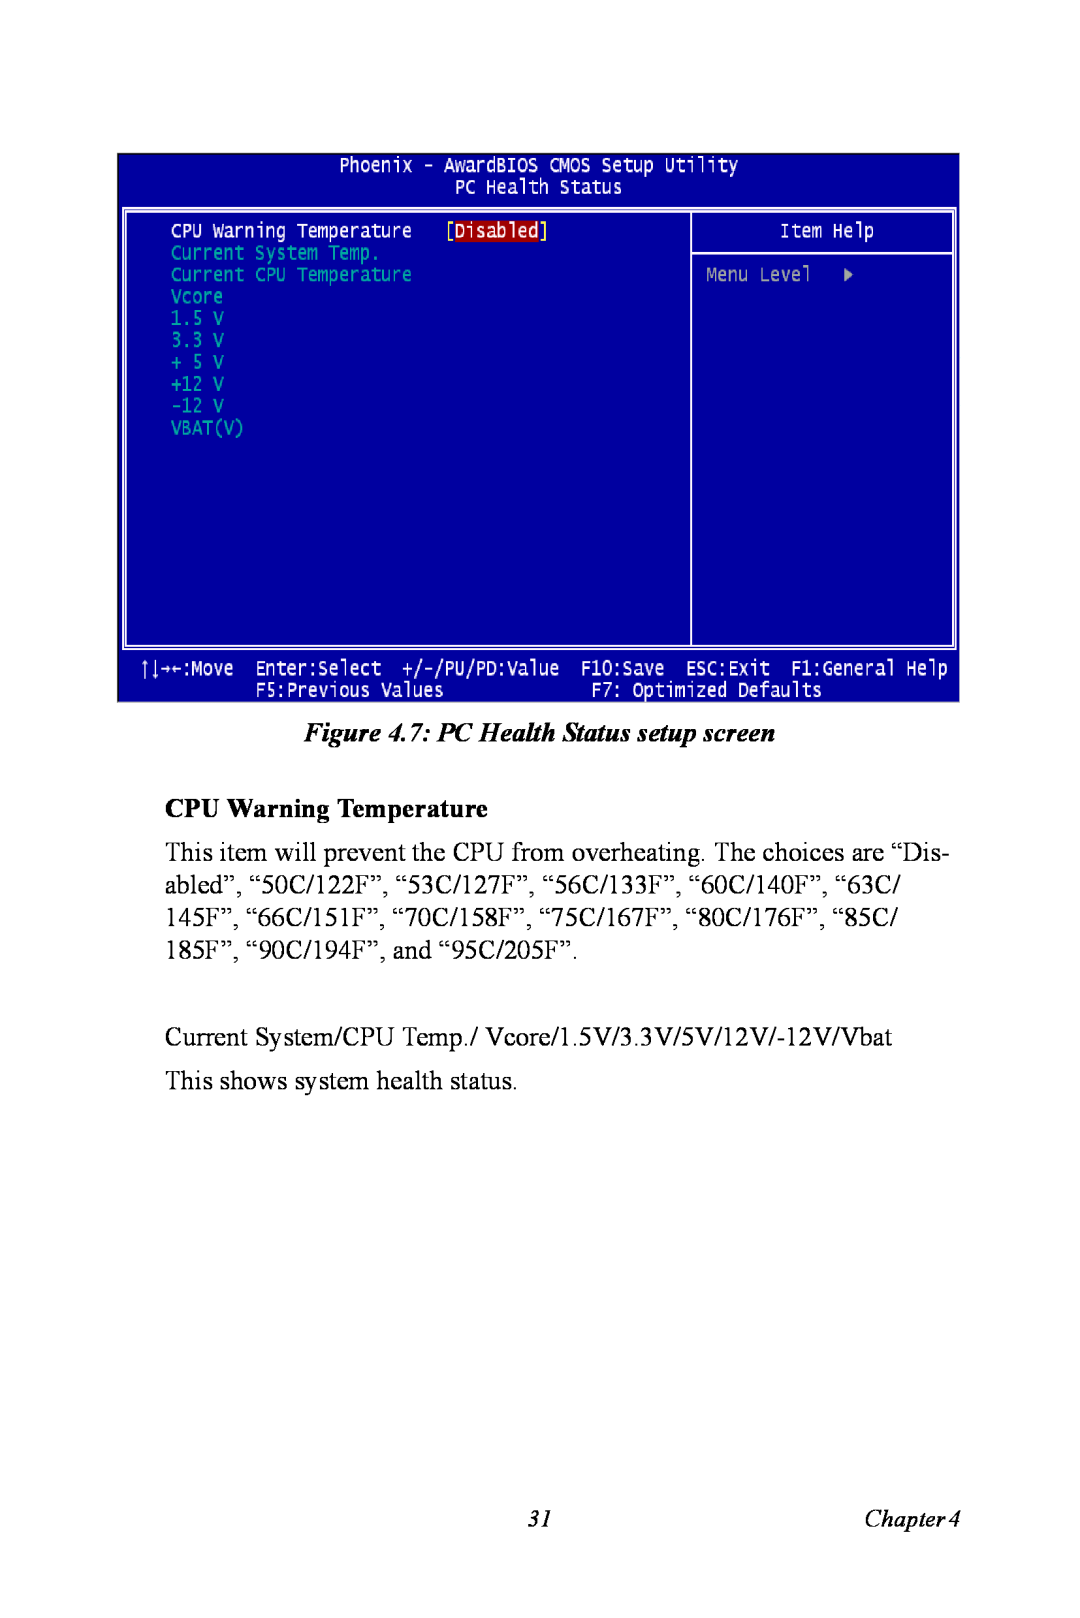 Intel 3U Compact PCI, MIC-3321 user manual 7: PC Health Status setup screen, CPU Warning Temperature 